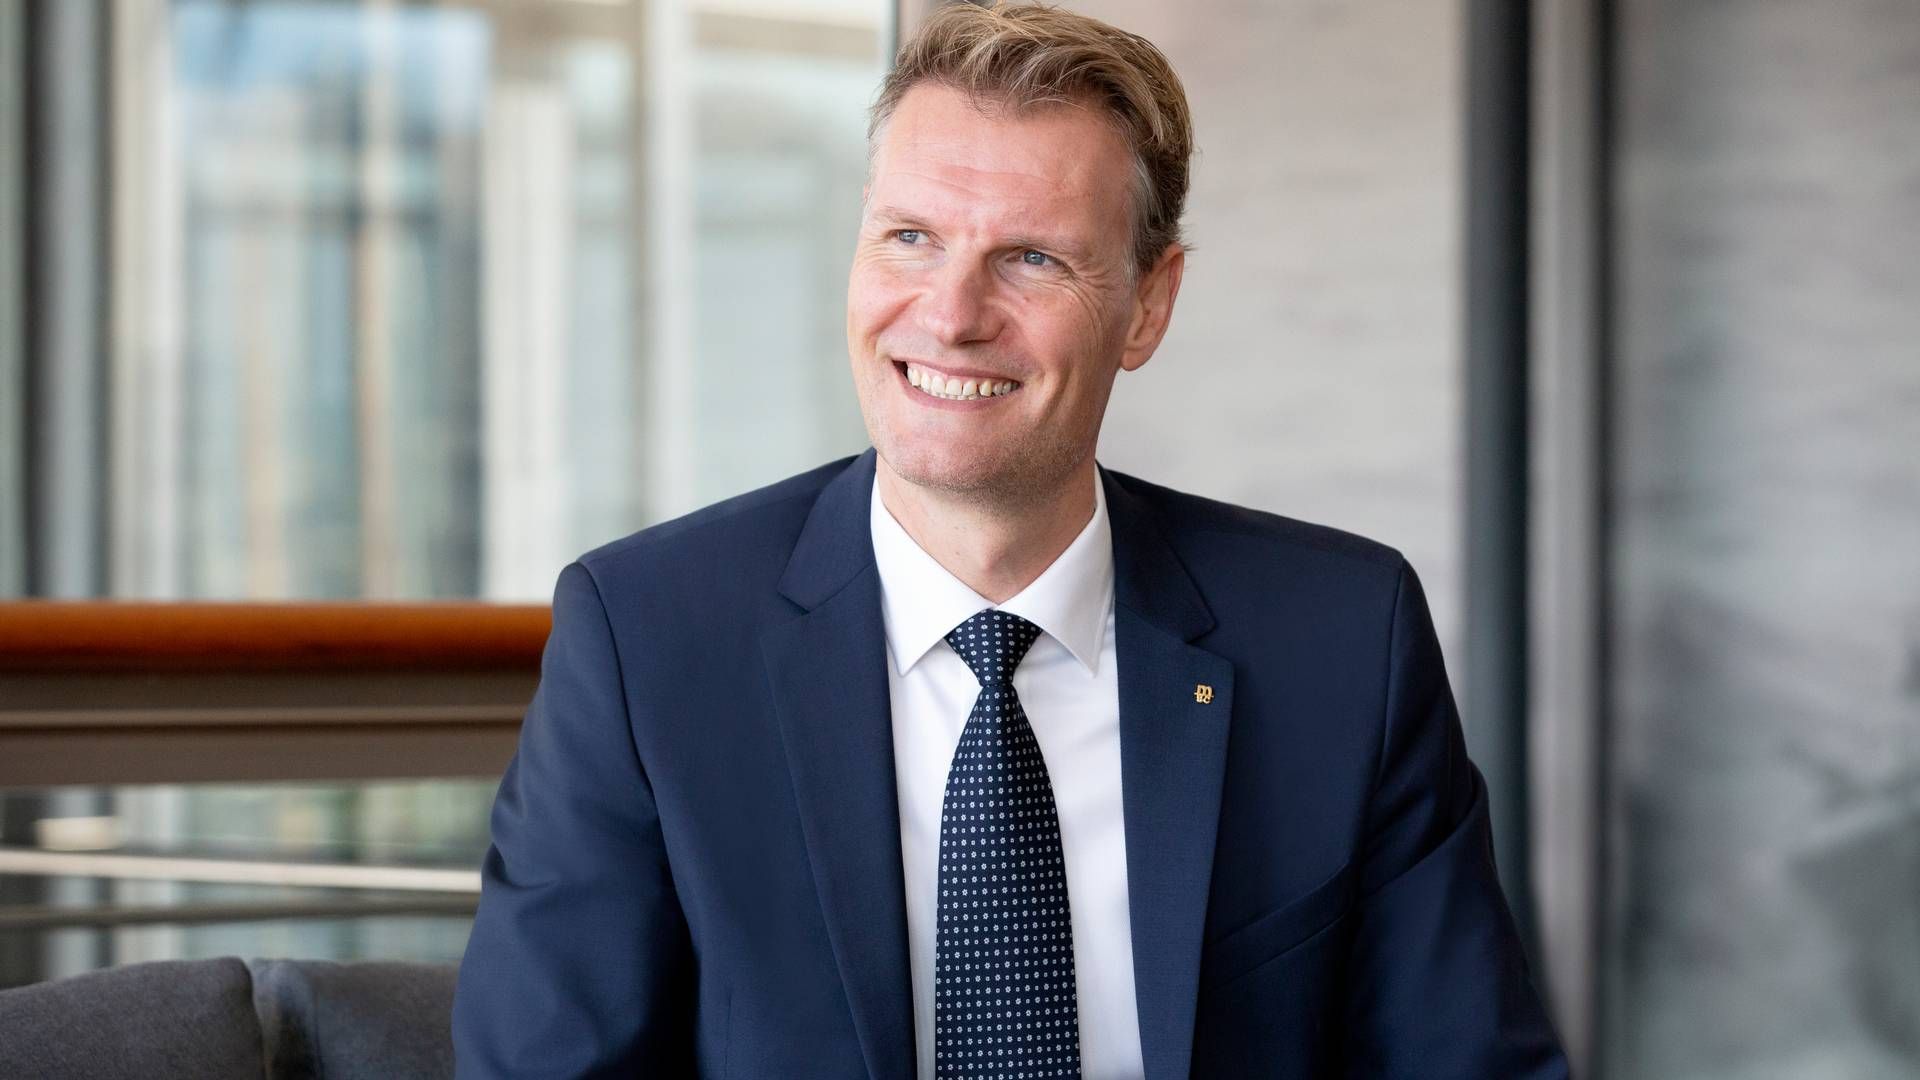 Søren Toft is CEO of the box carrier MSC. | Photo: Msc - Pr